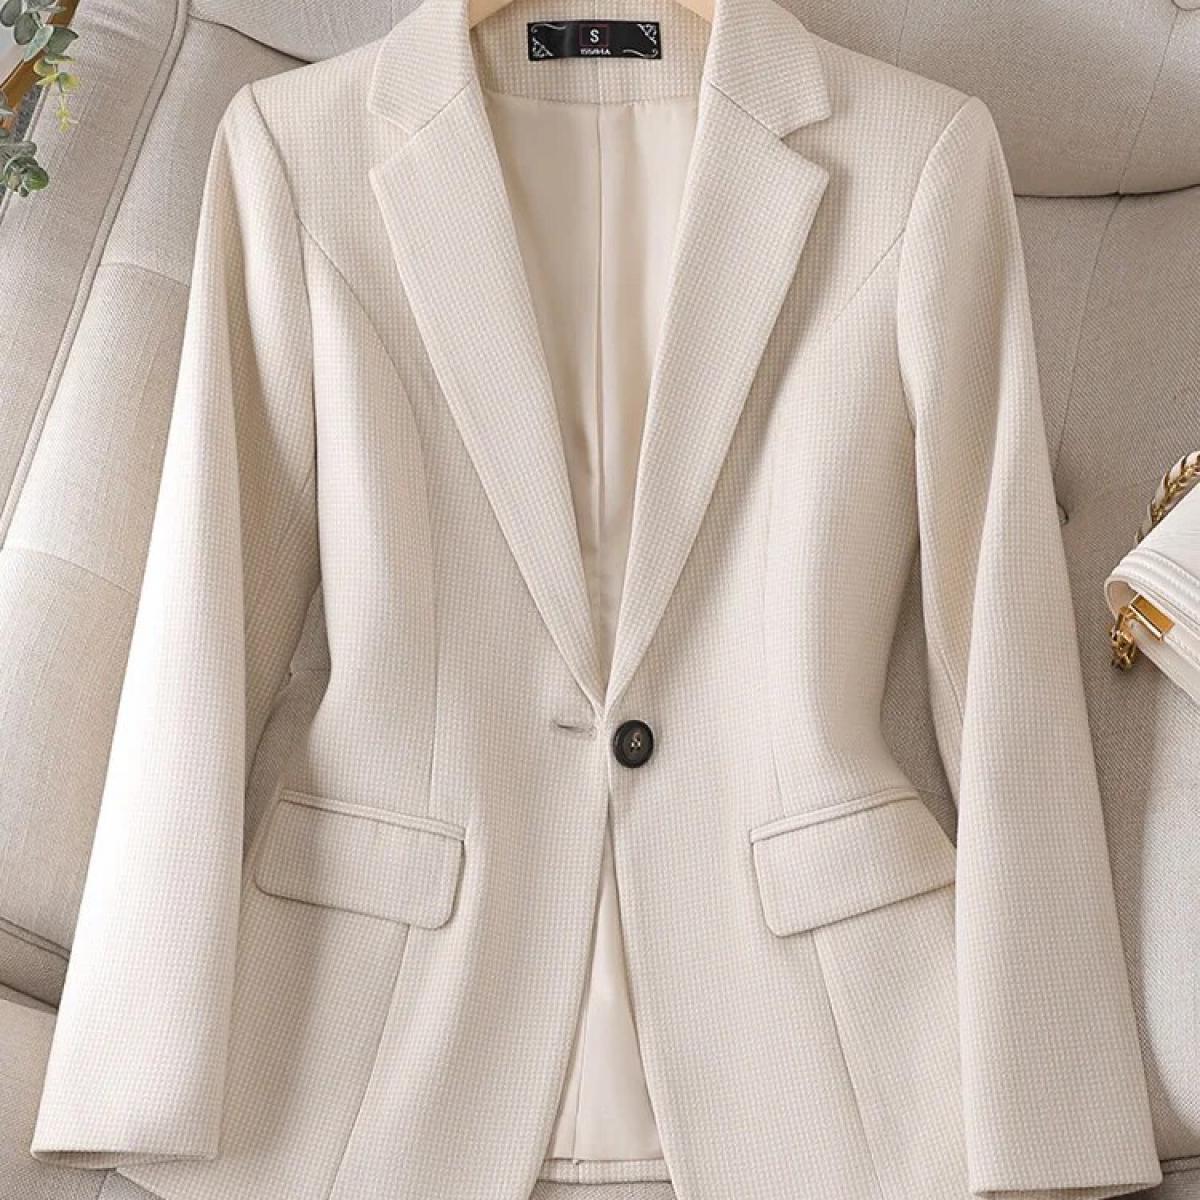 New Arrival Ladies Blazer Formal Jacket Women Long Sleeve Single Button Gray Apricot Plaid Female Work Wear Coat